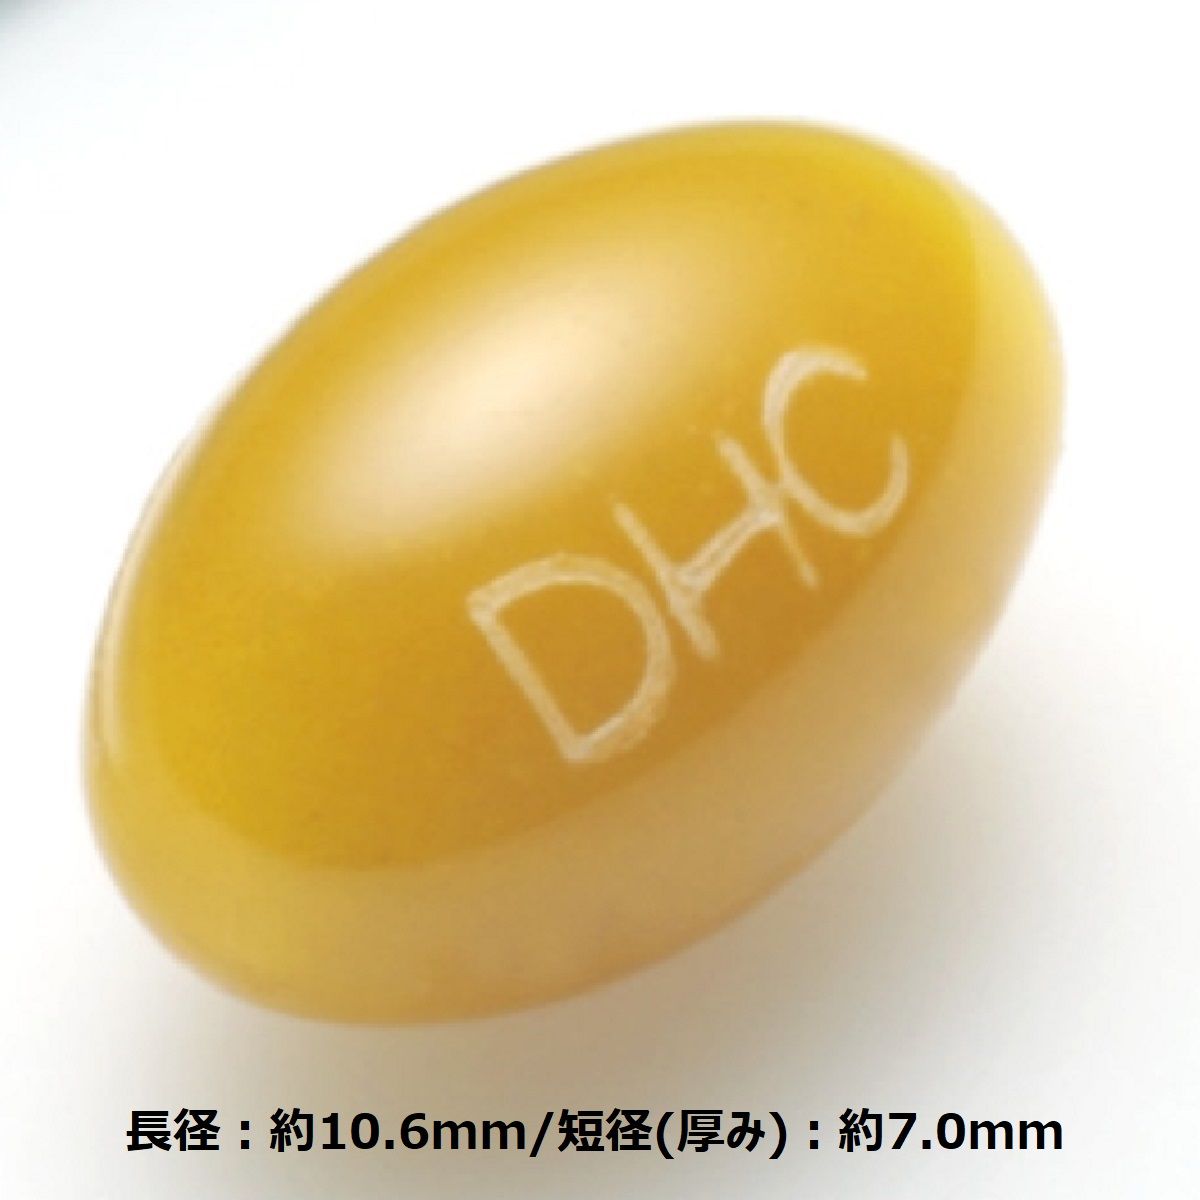 DHC 60日分 ヒアルロン酸 健康食品 サプリメント　2袋セット